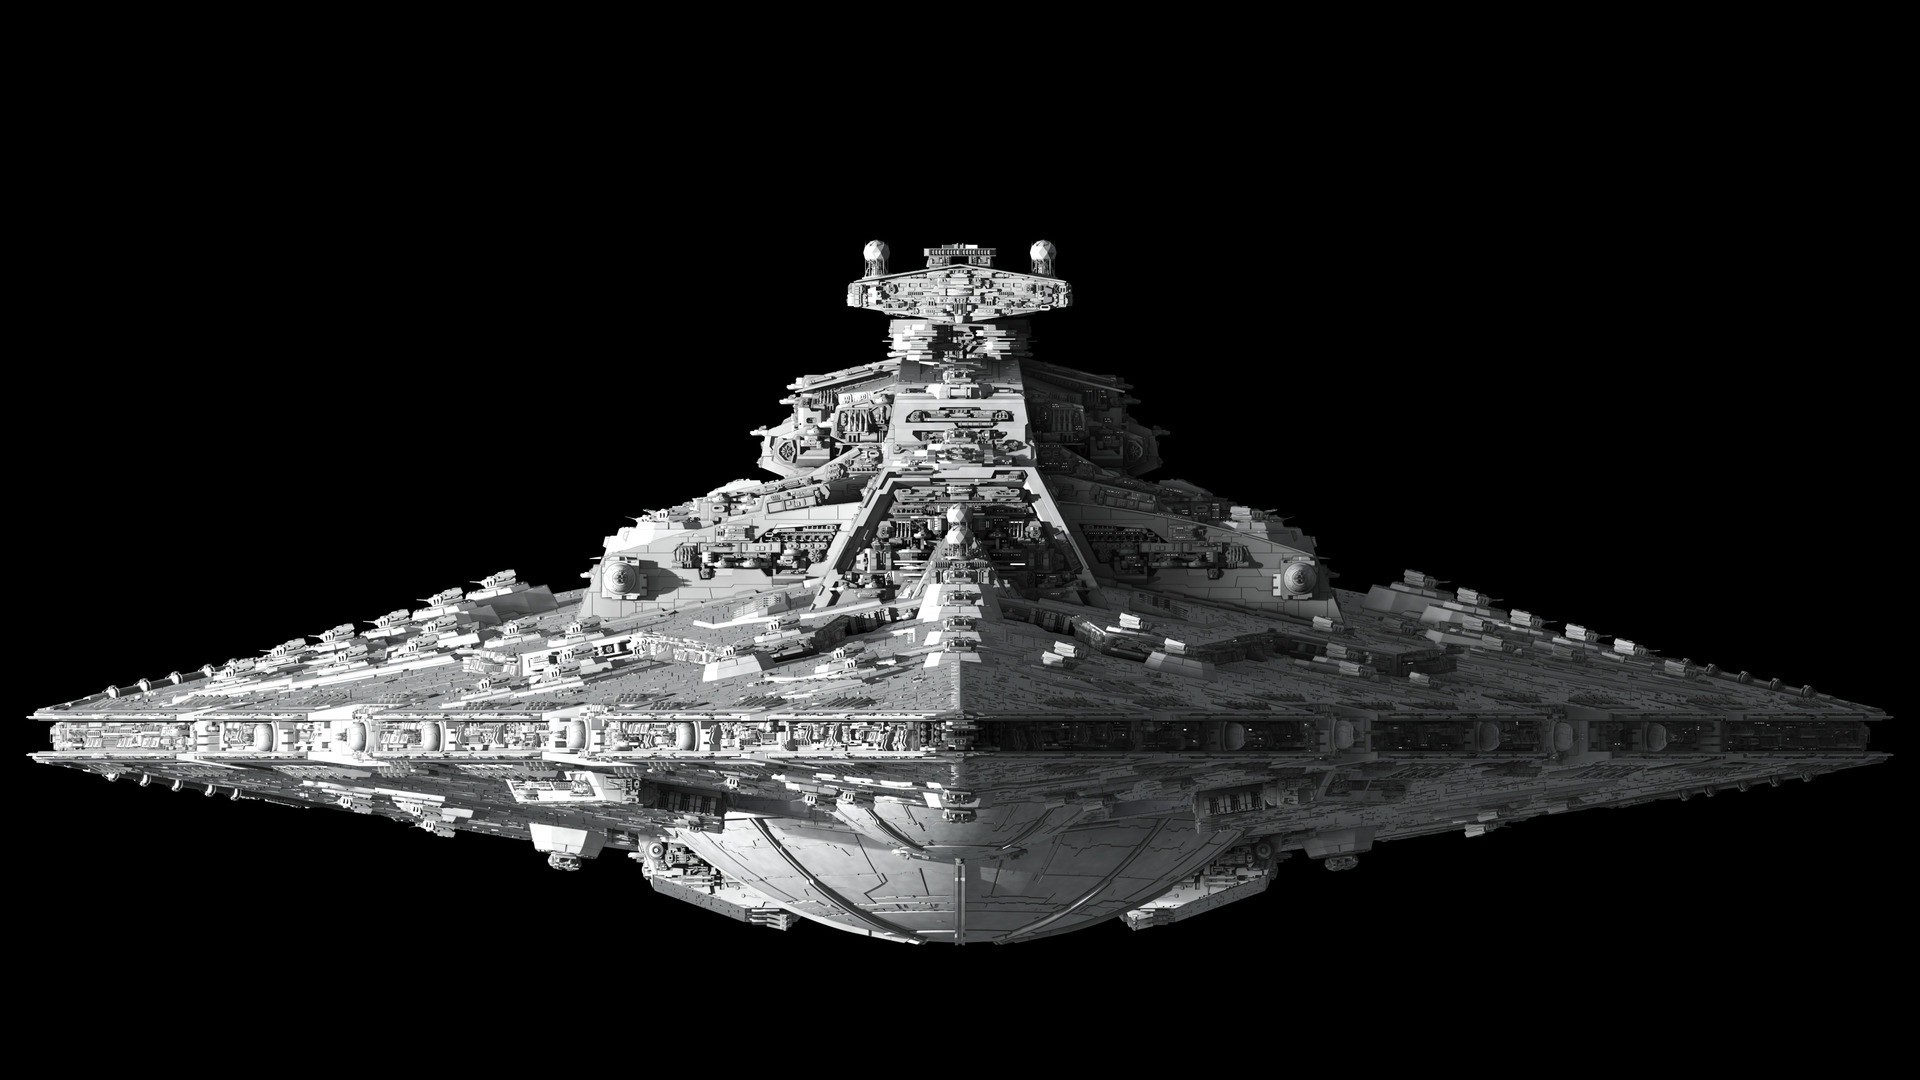 General 1920x1080 Star Wars Star Destroyer Imperial Forces CGI spaceship digital art science fiction Star Wars Ships fractalsponge vehicle